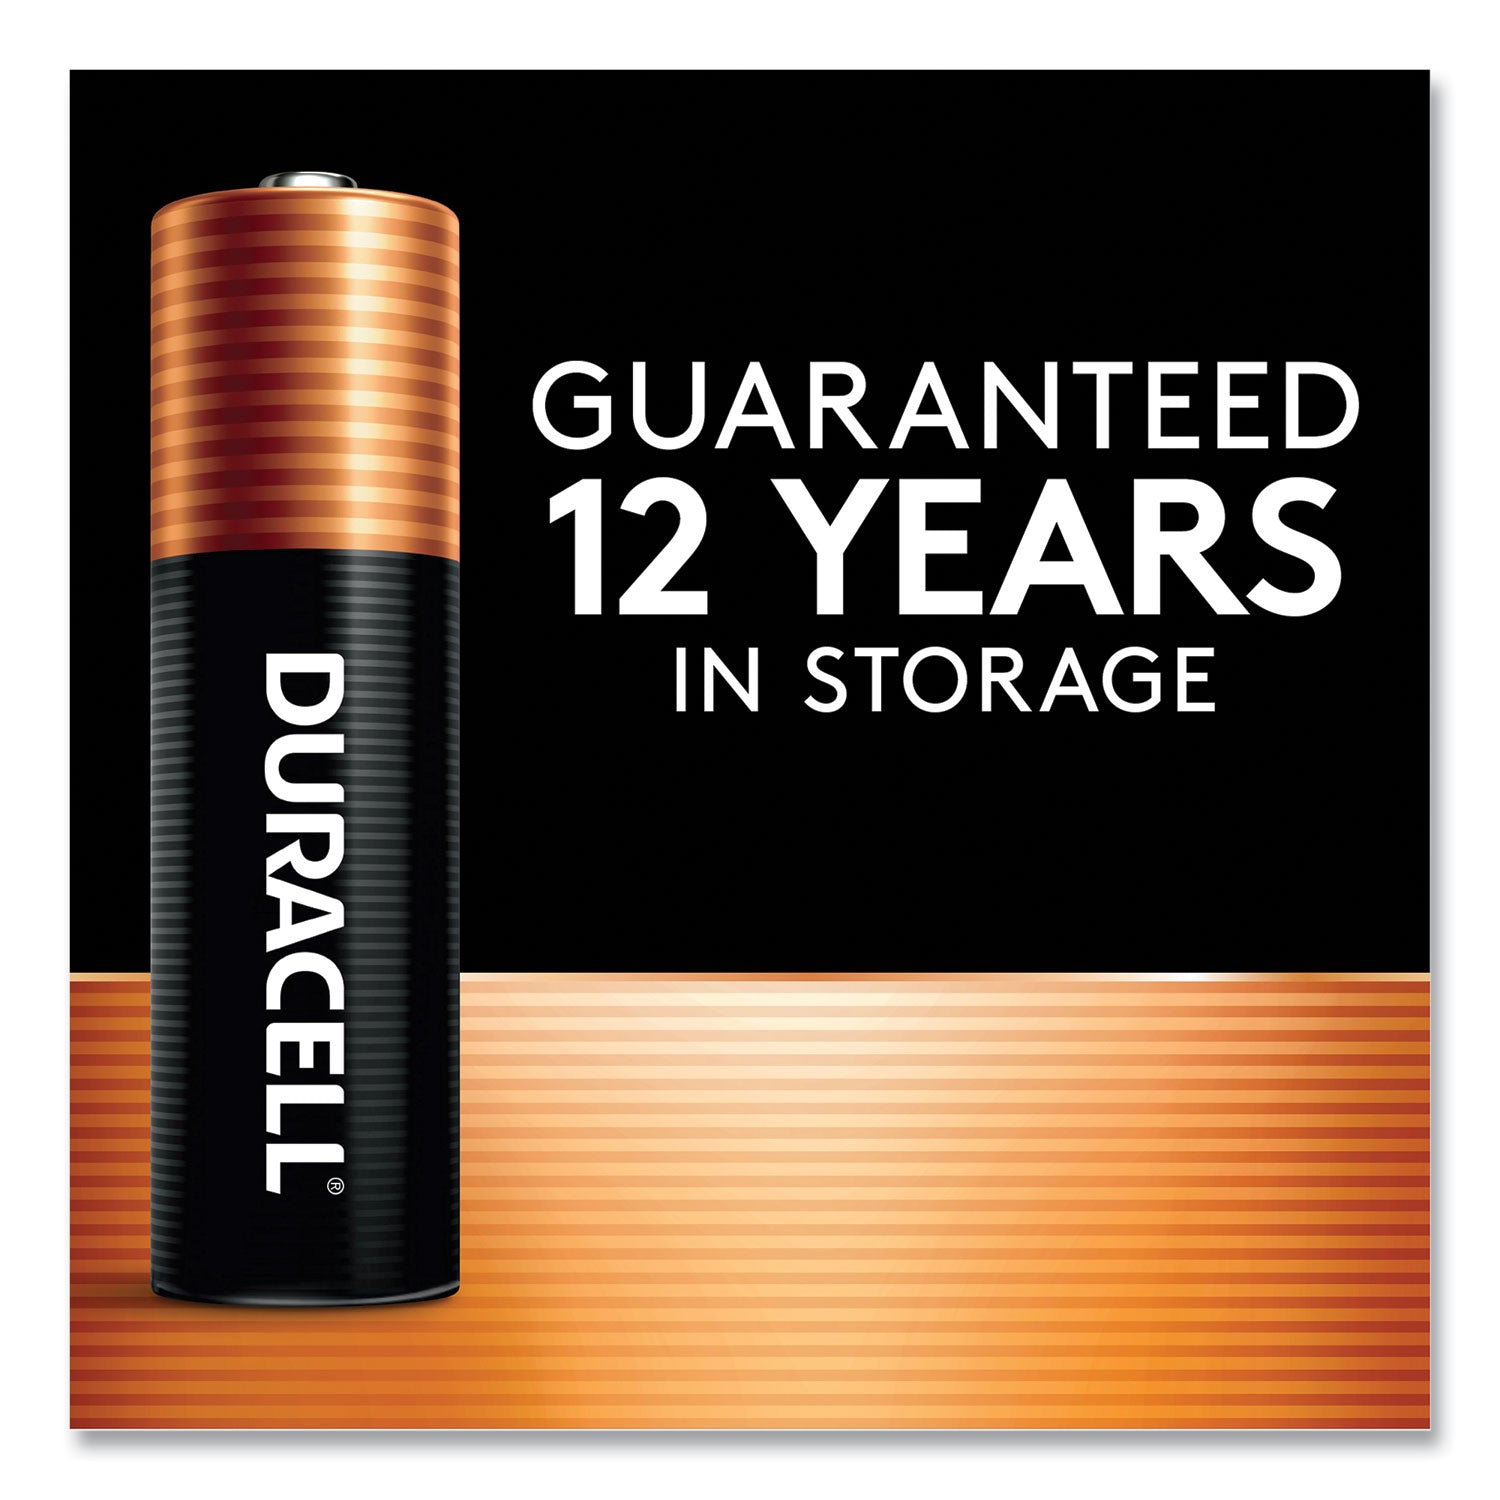 Power Boost CopperTop Alkaline AAA Batteries, 10/Pack - 3